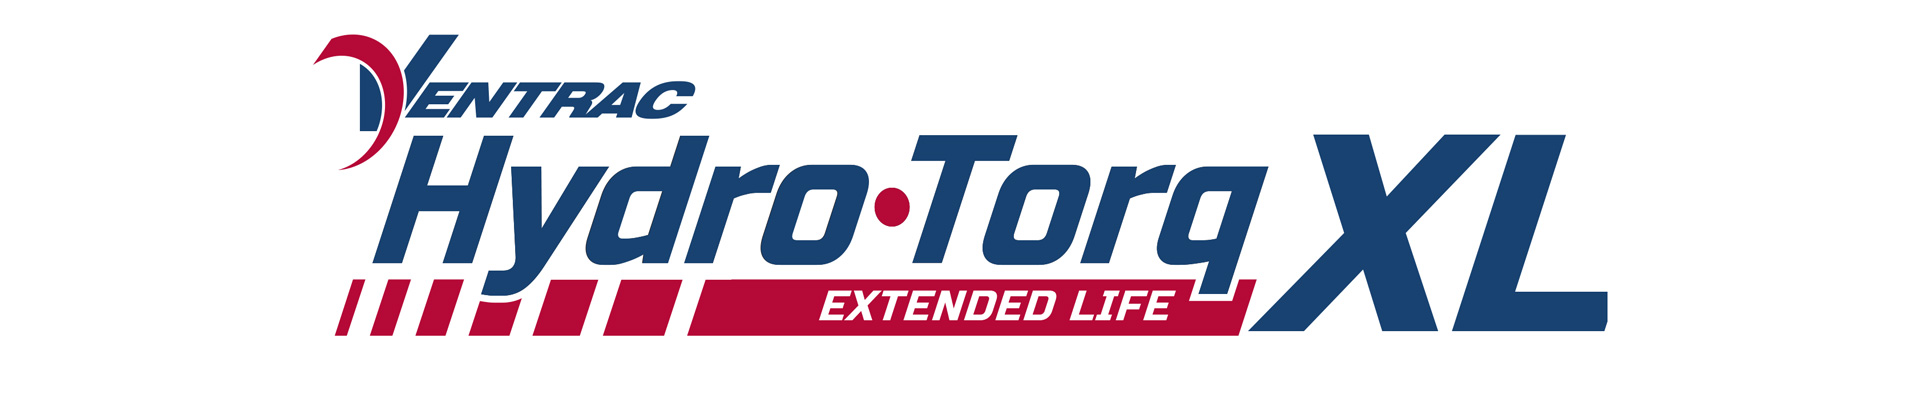 Hydro-Torq XL: Extended Life